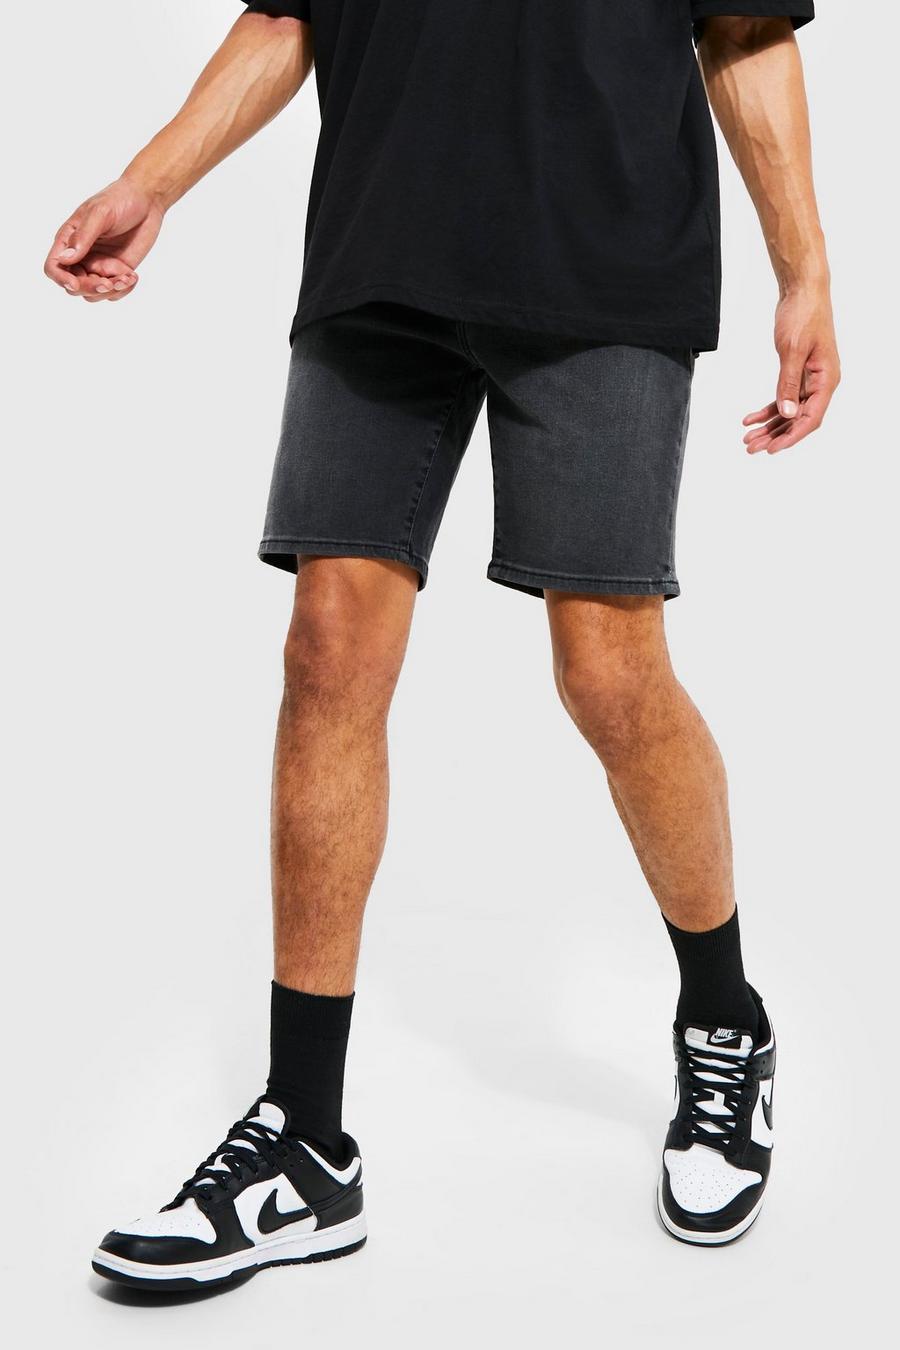 Pantaloncini Plus Size in denim Stretch Skinny Fit, Charcoal grigio